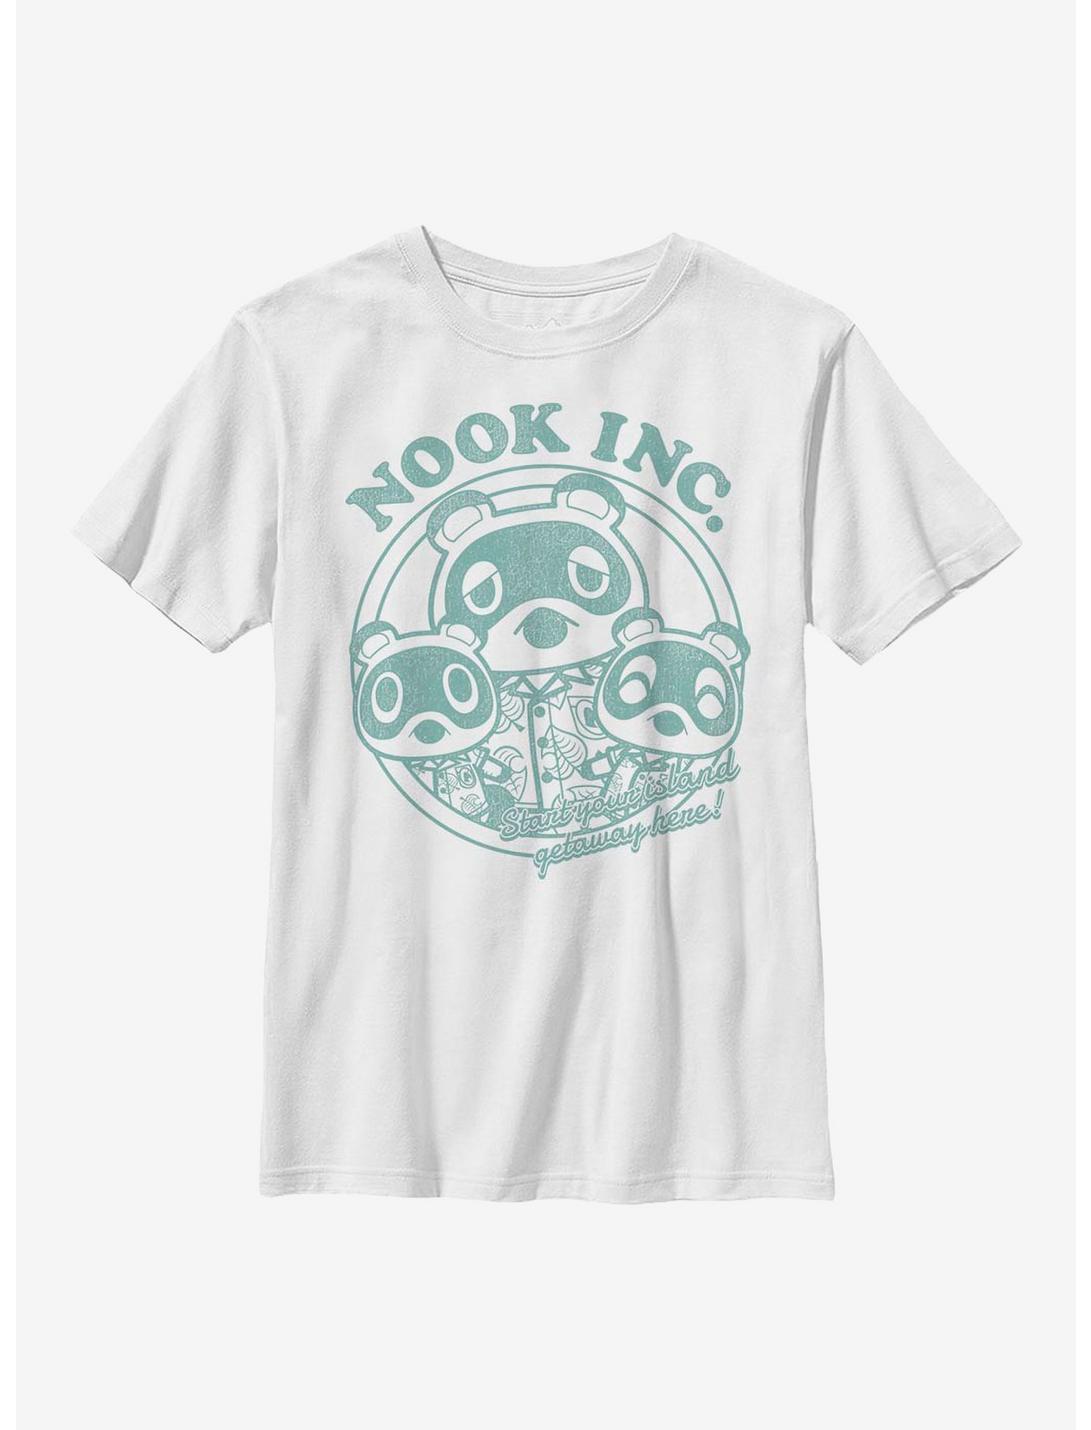 Animal Crossing: New Horizons Nook Inc. Getaway Youth T-Shirt, WHITE, hi-res